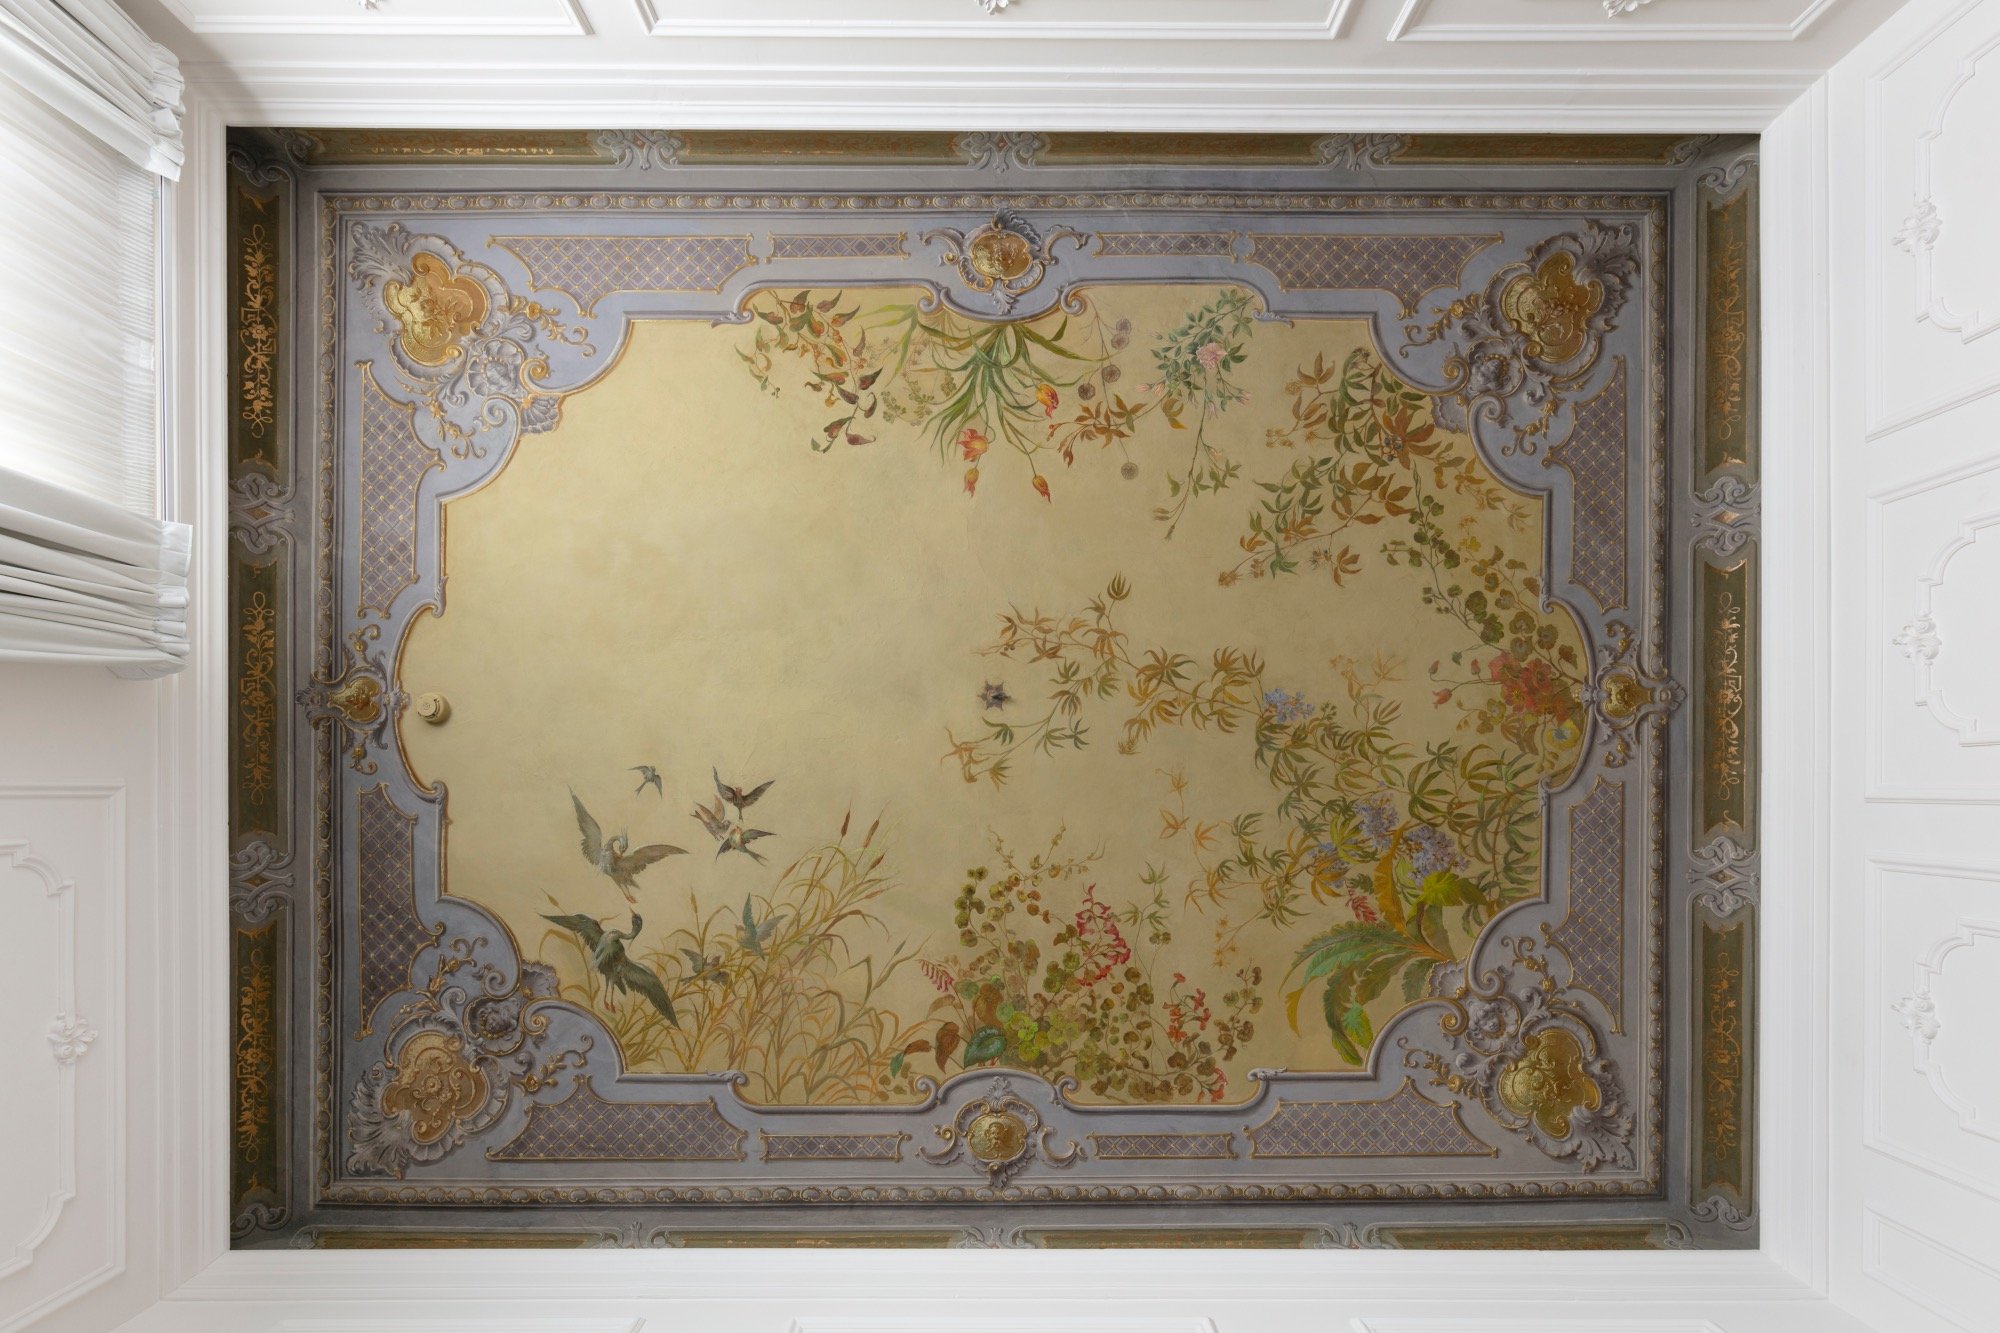 Dimora Palanca Master Suite Fresco ceiling.jpg